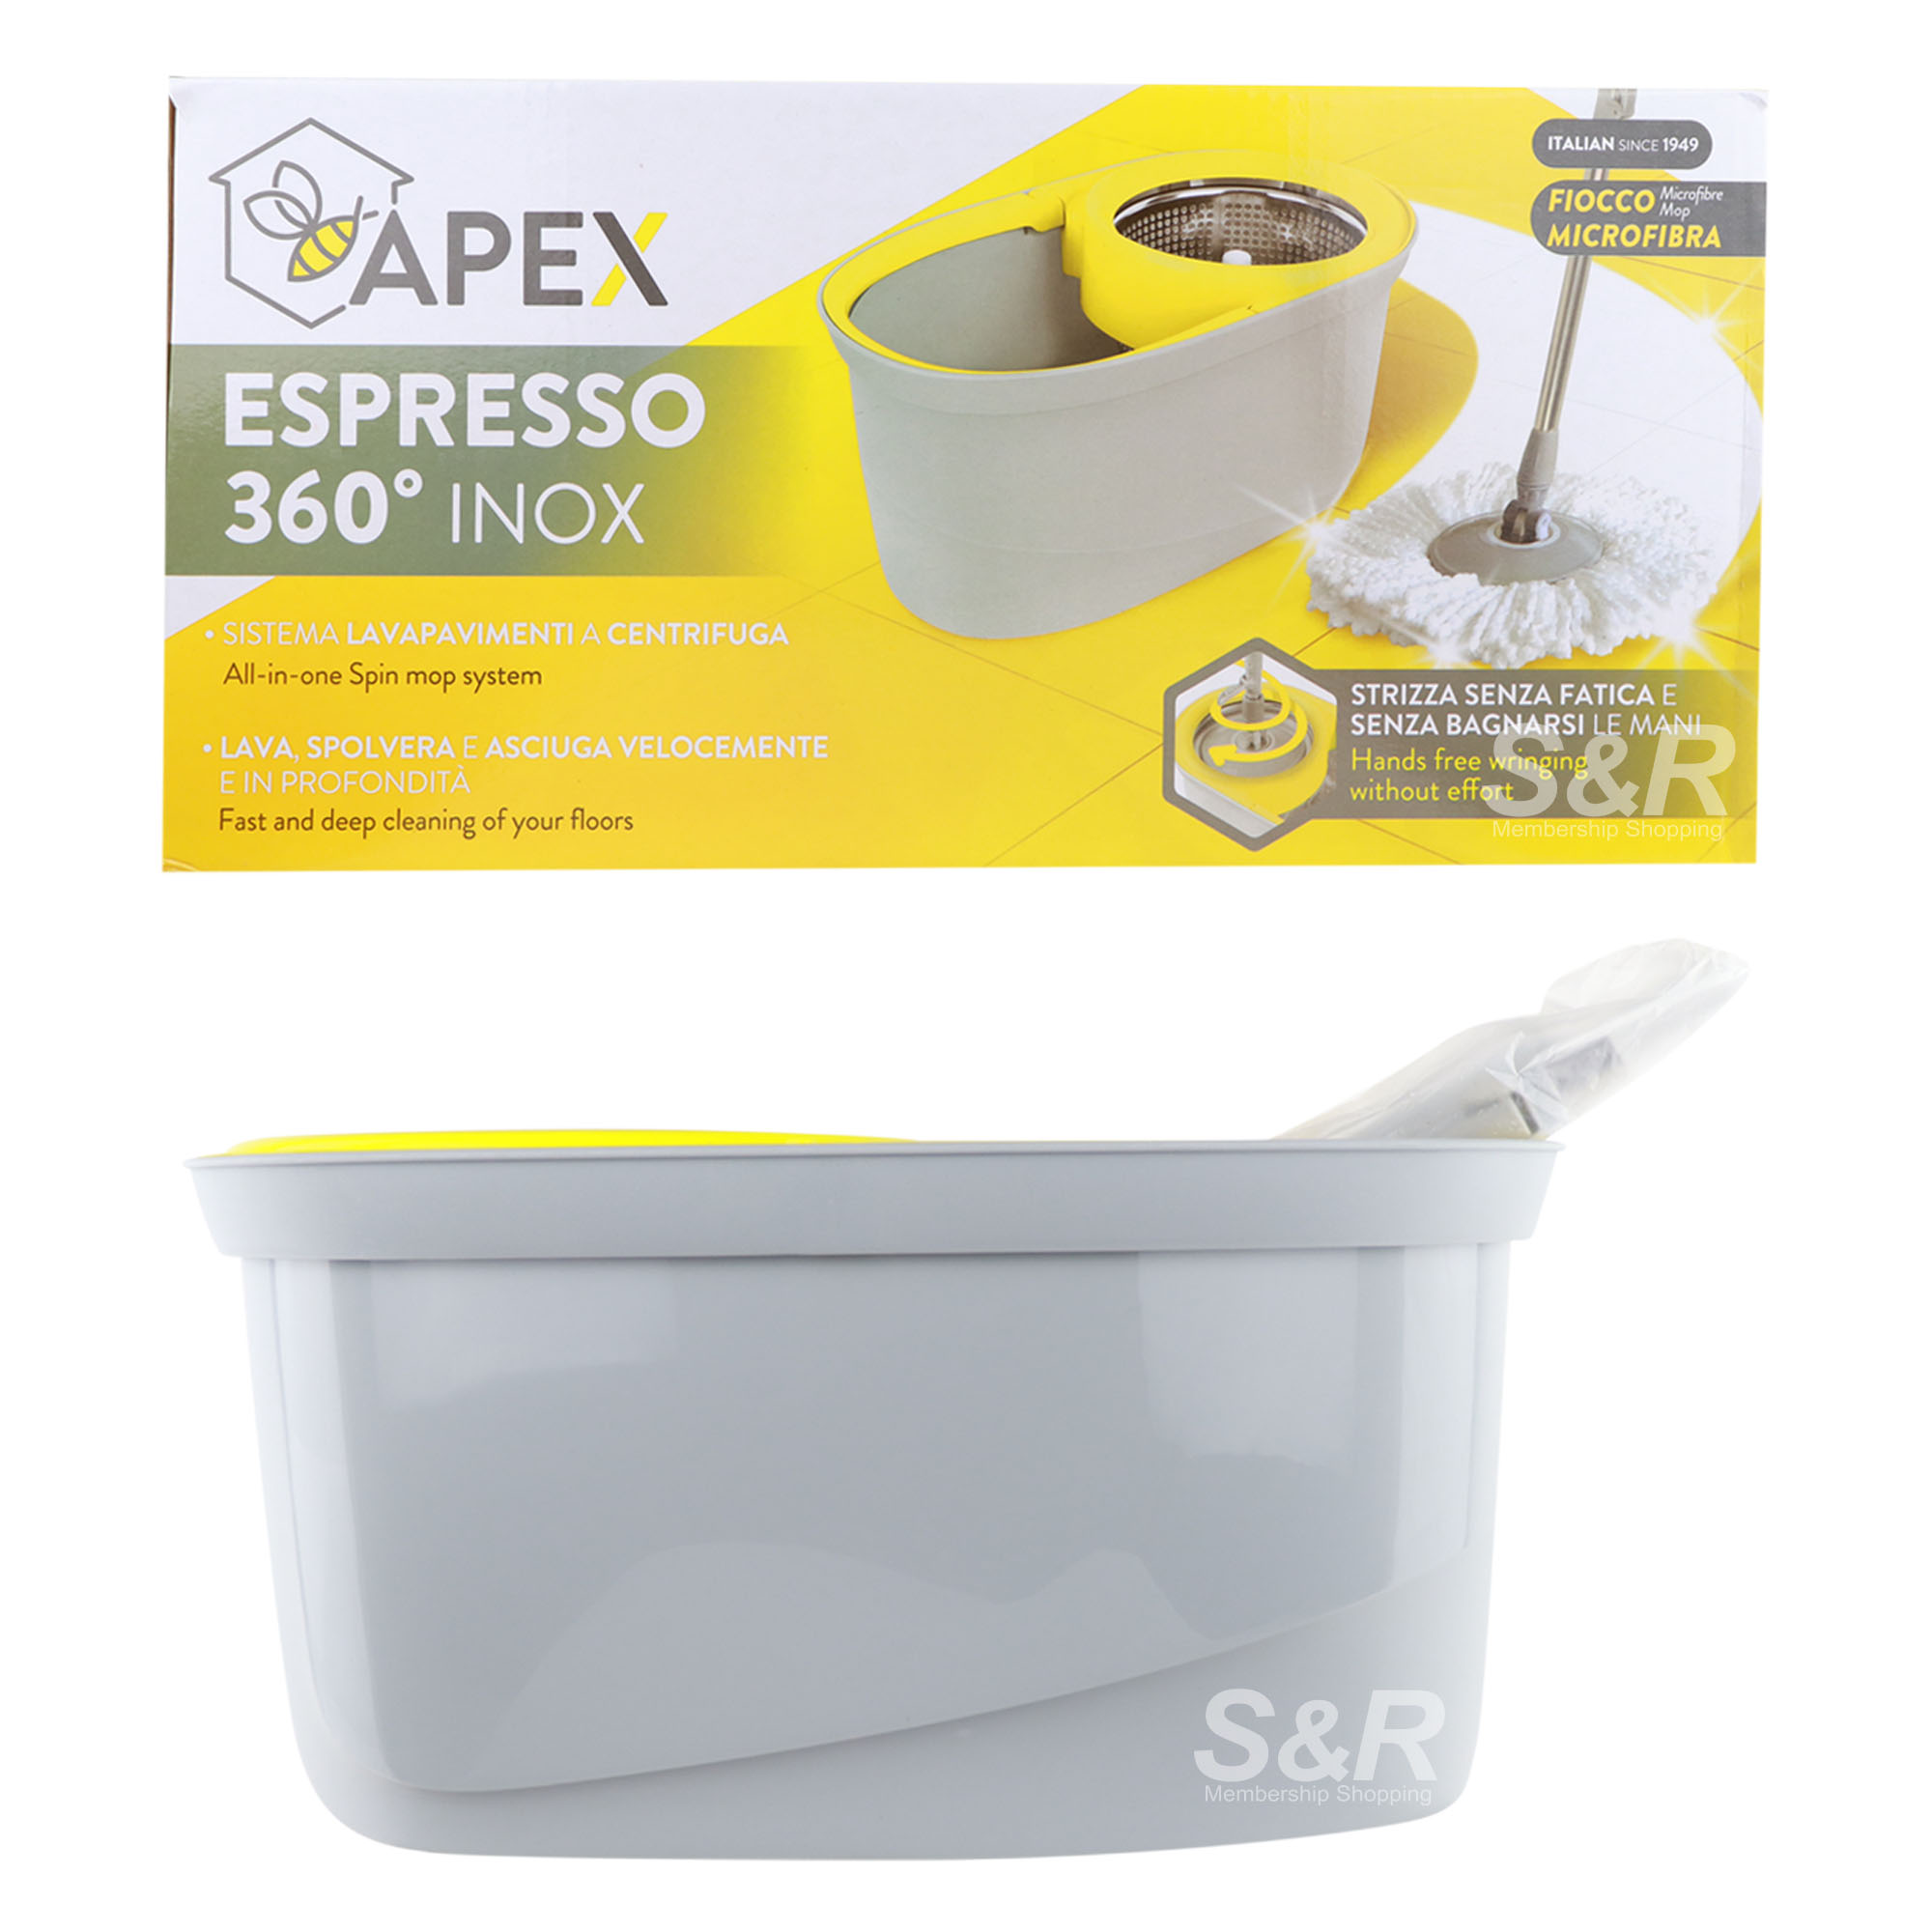 Apex Espresso